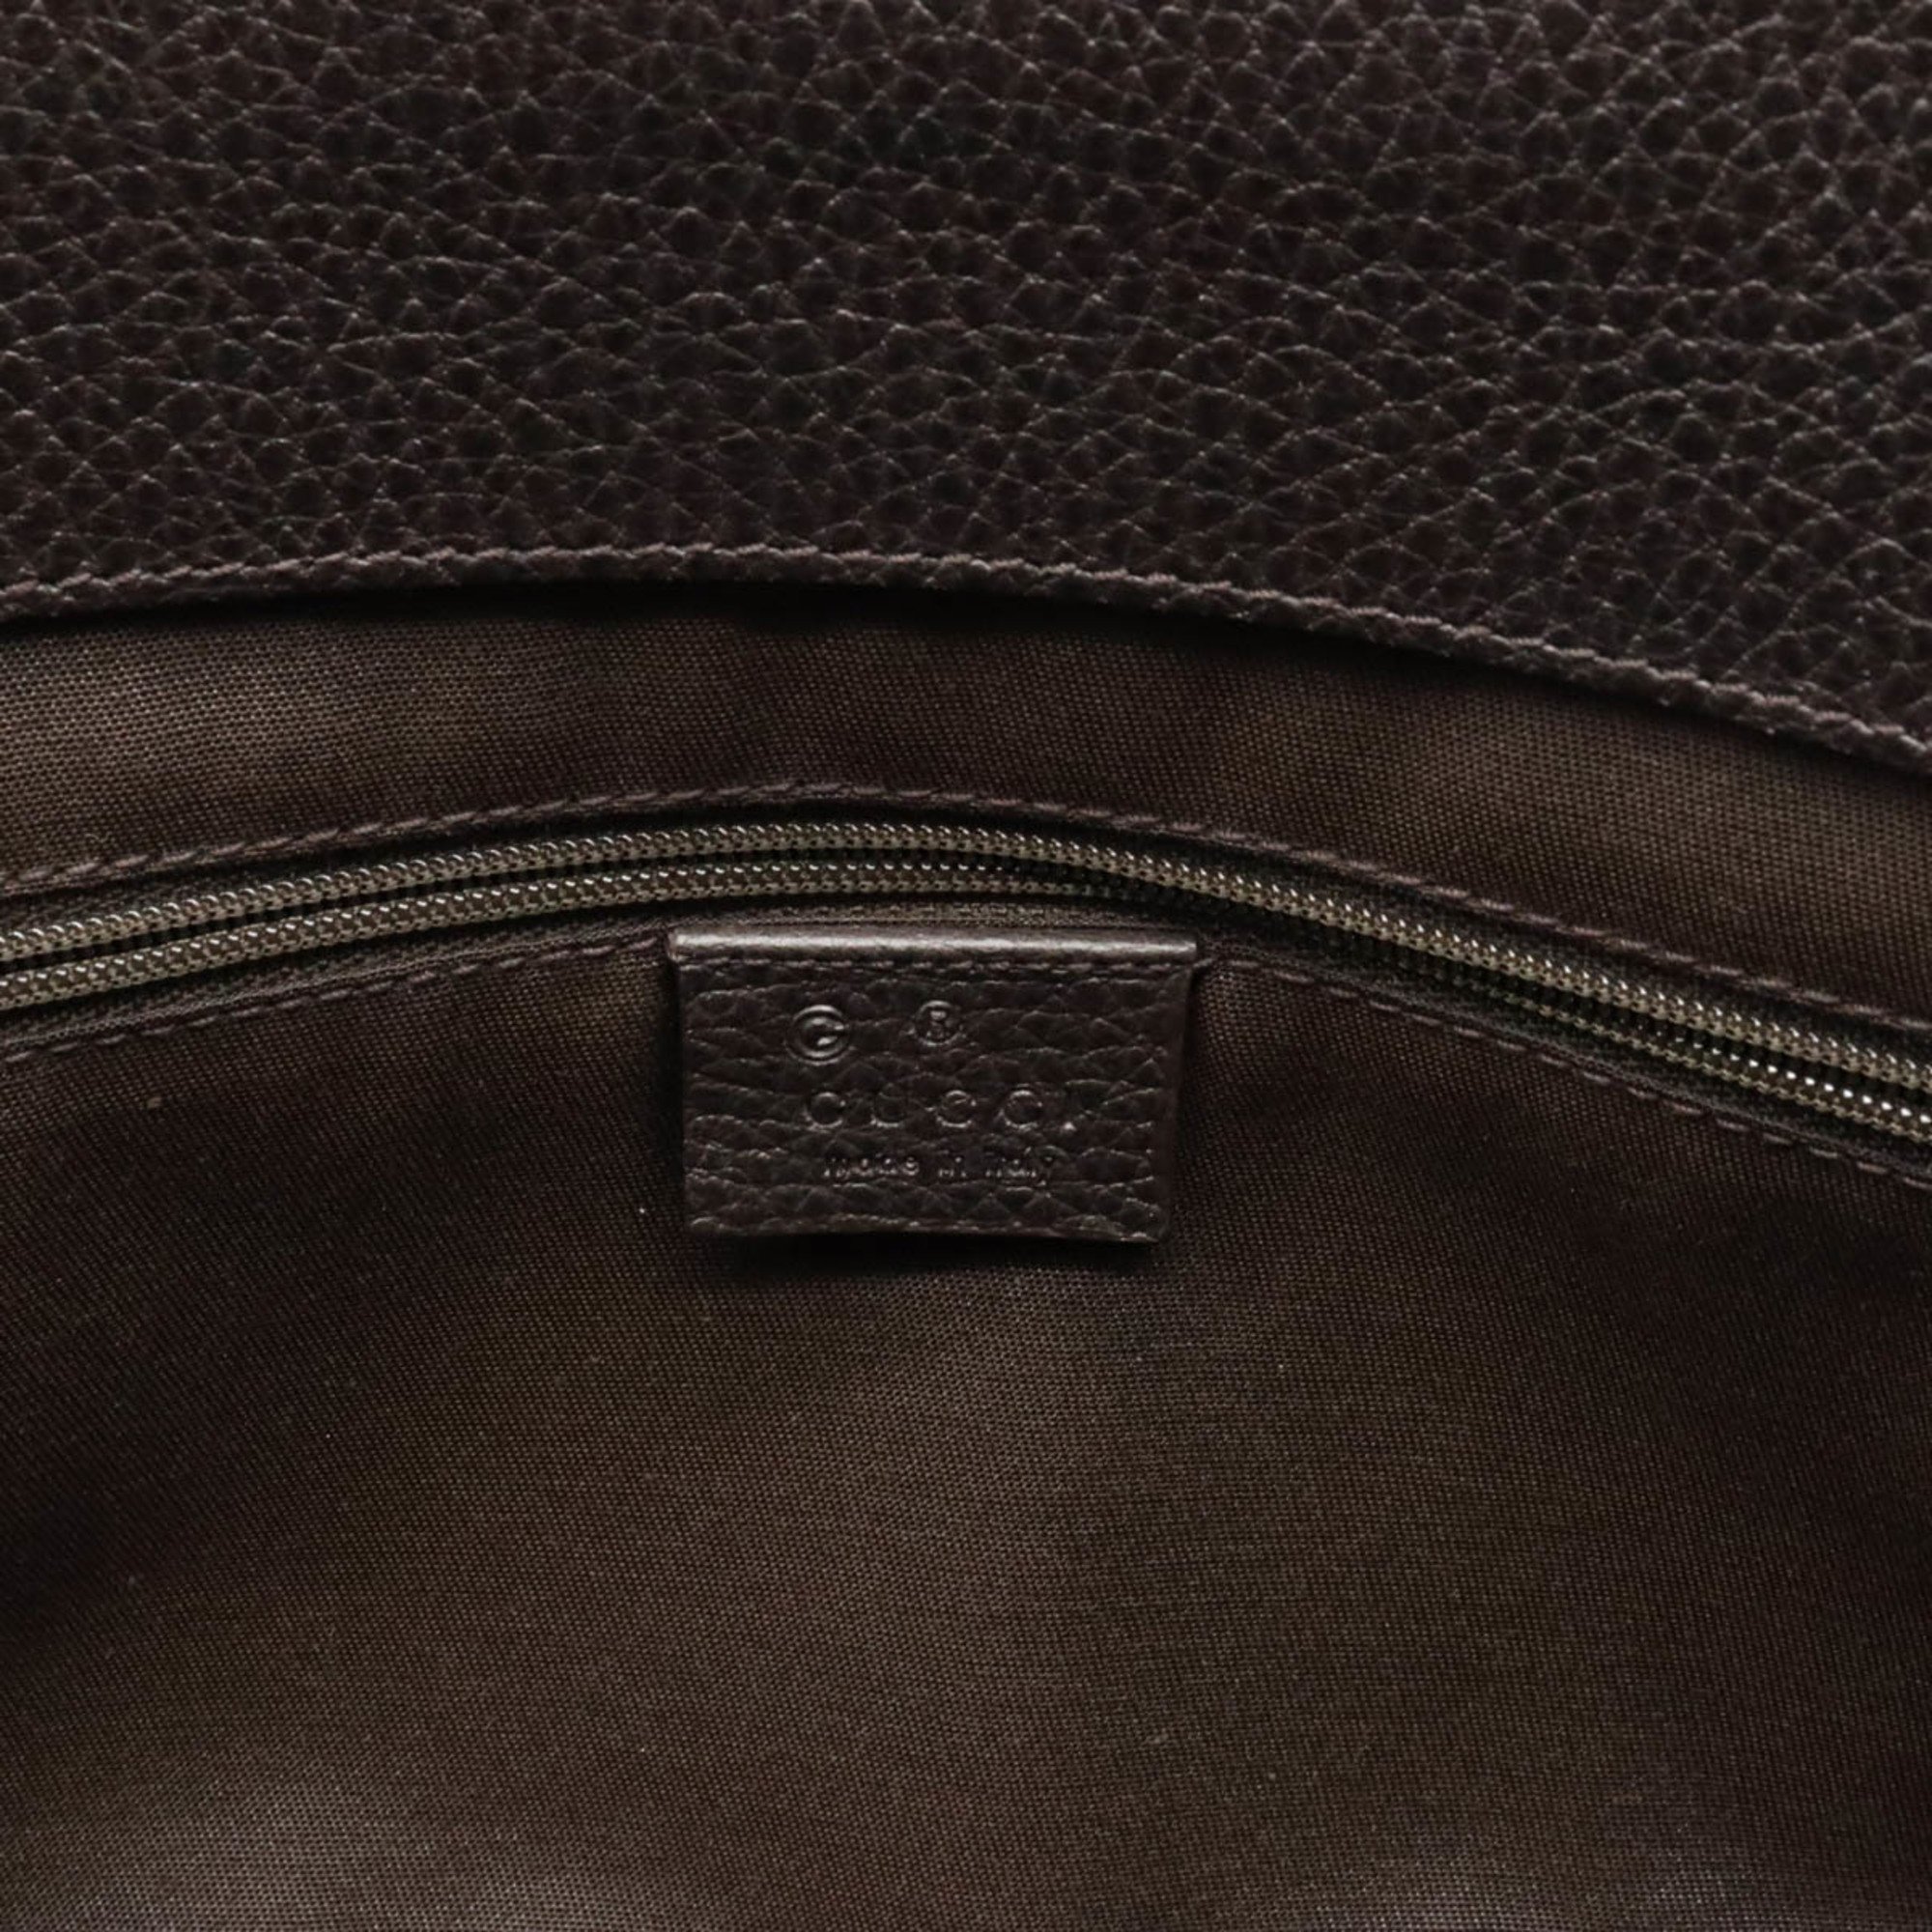 GUCCI GG Crystal Tote Bag Shoulder Coated Canvas Leather Khaki Beige Dark Brown 327787